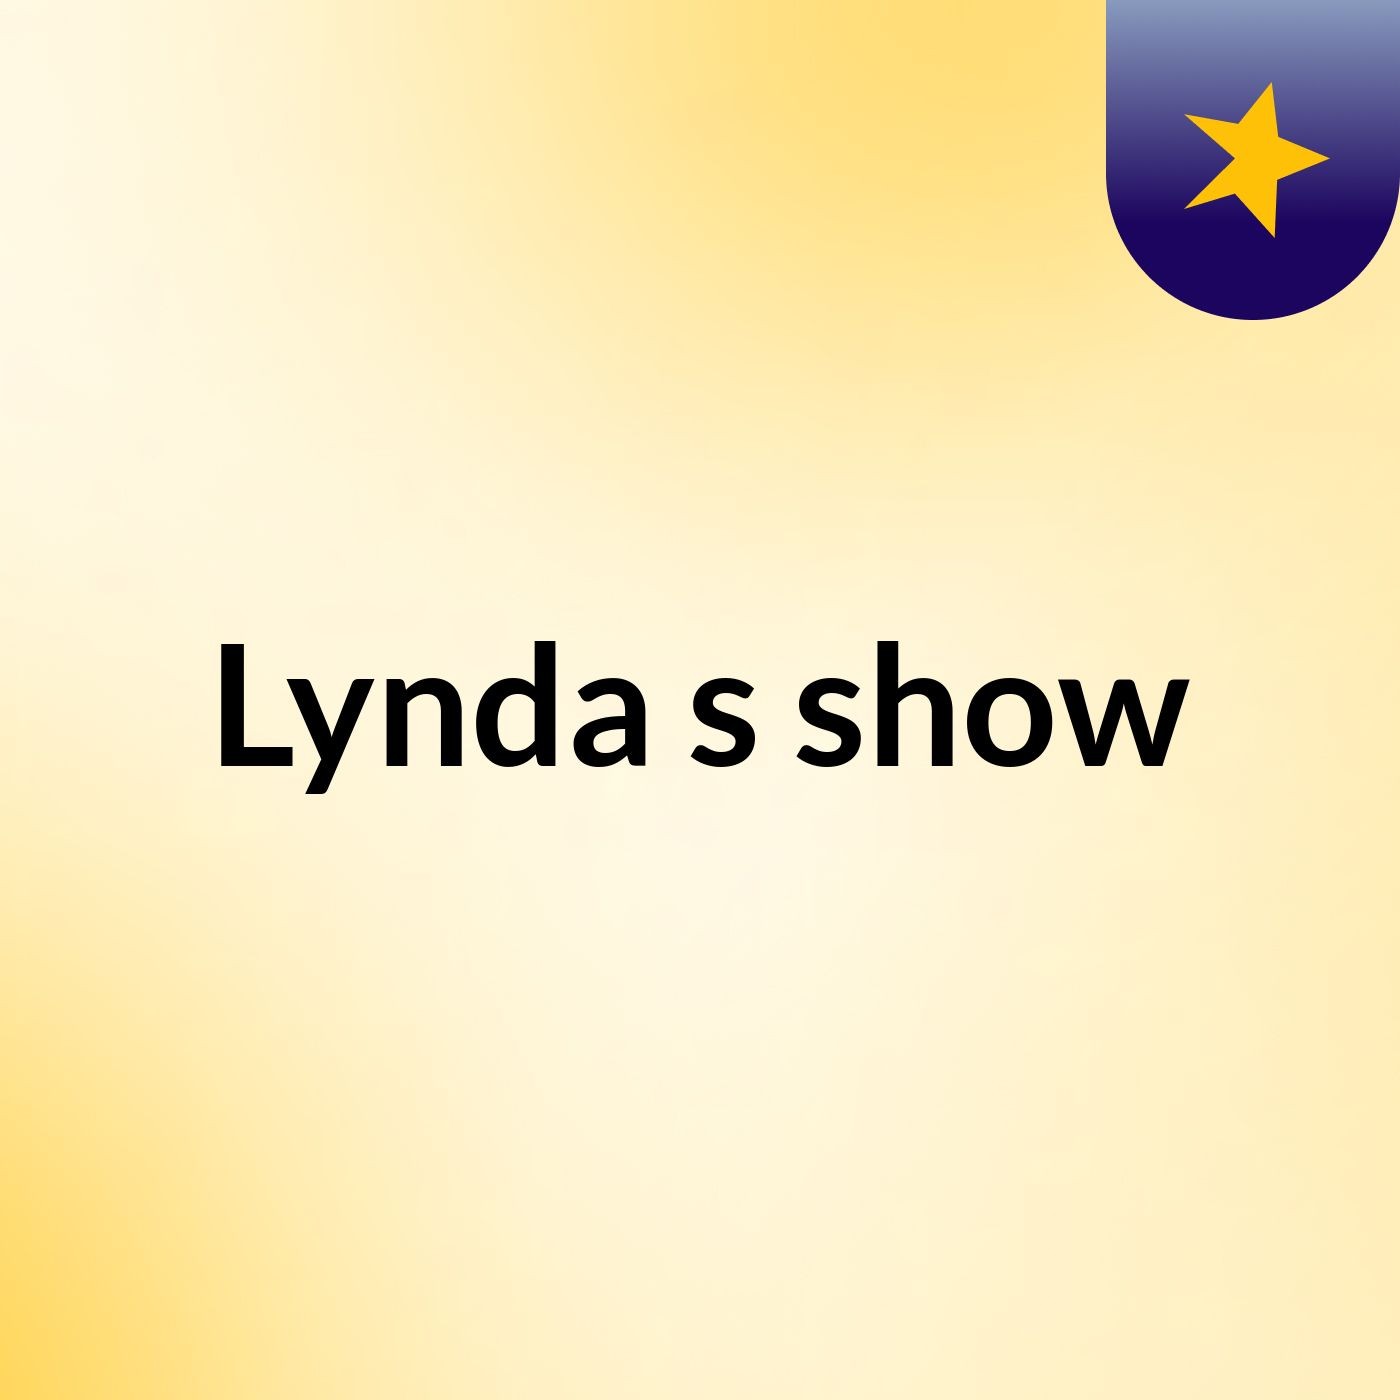 Episode 15 - Lynda's show